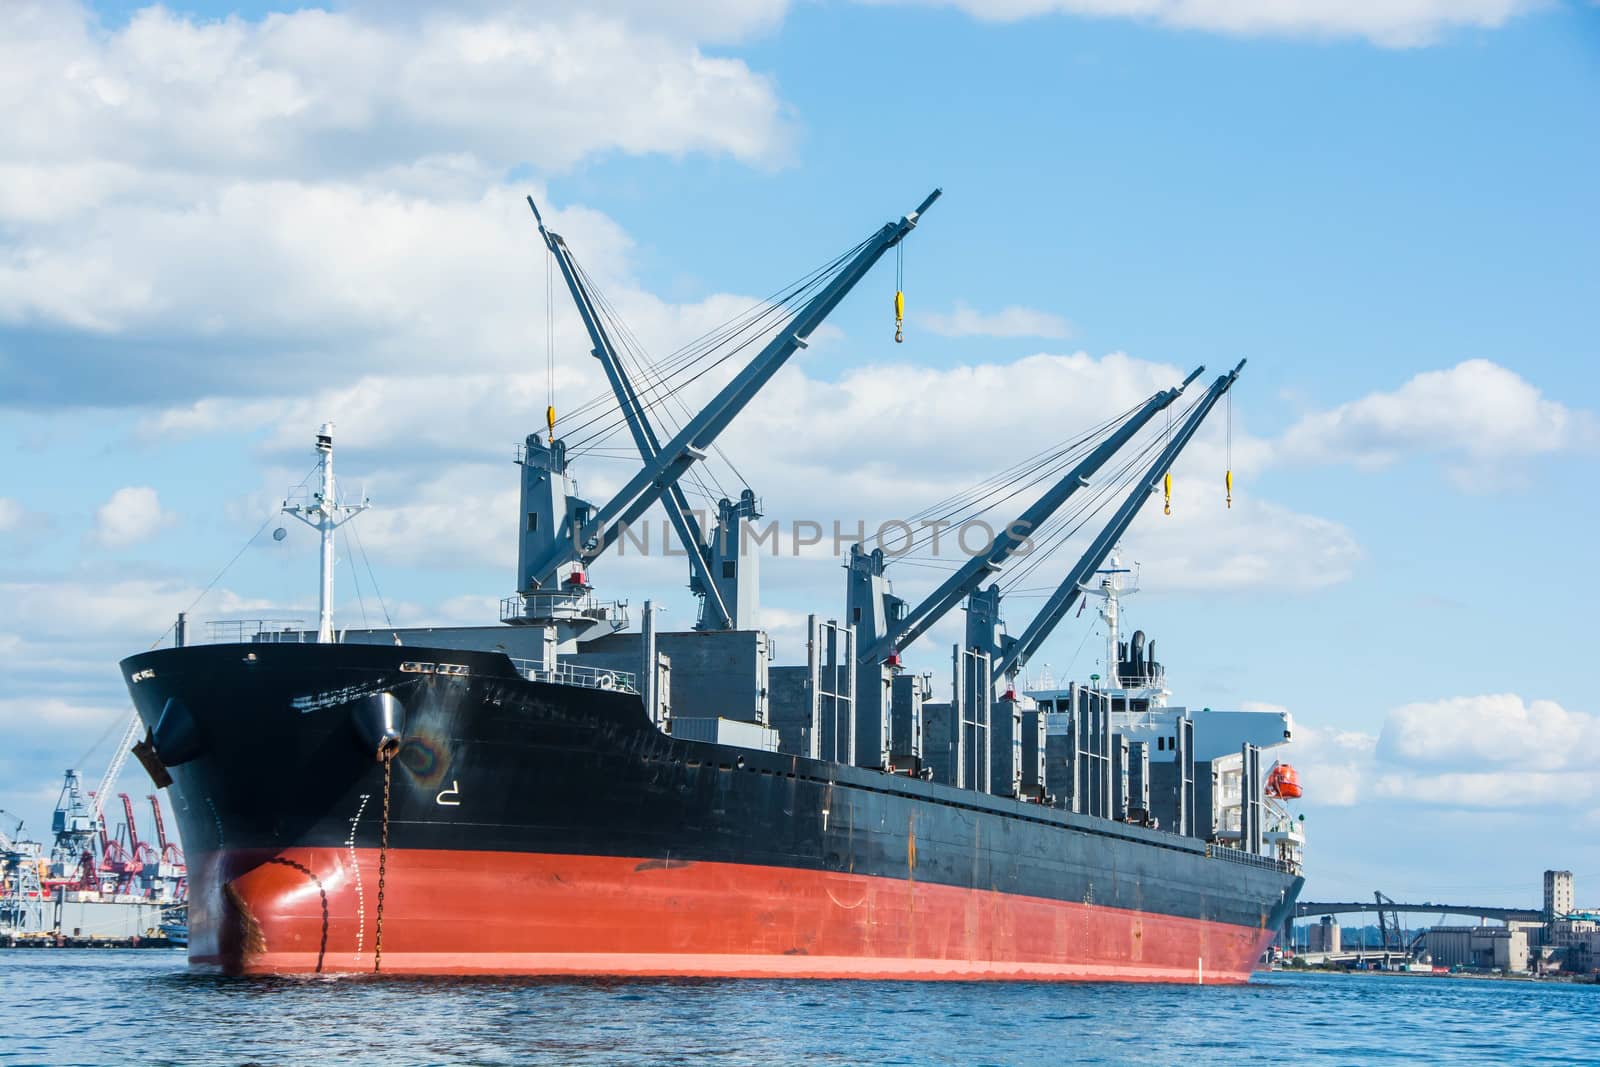 Bulk Carrier anchored in Seattle's Elliott Bay by cestes001